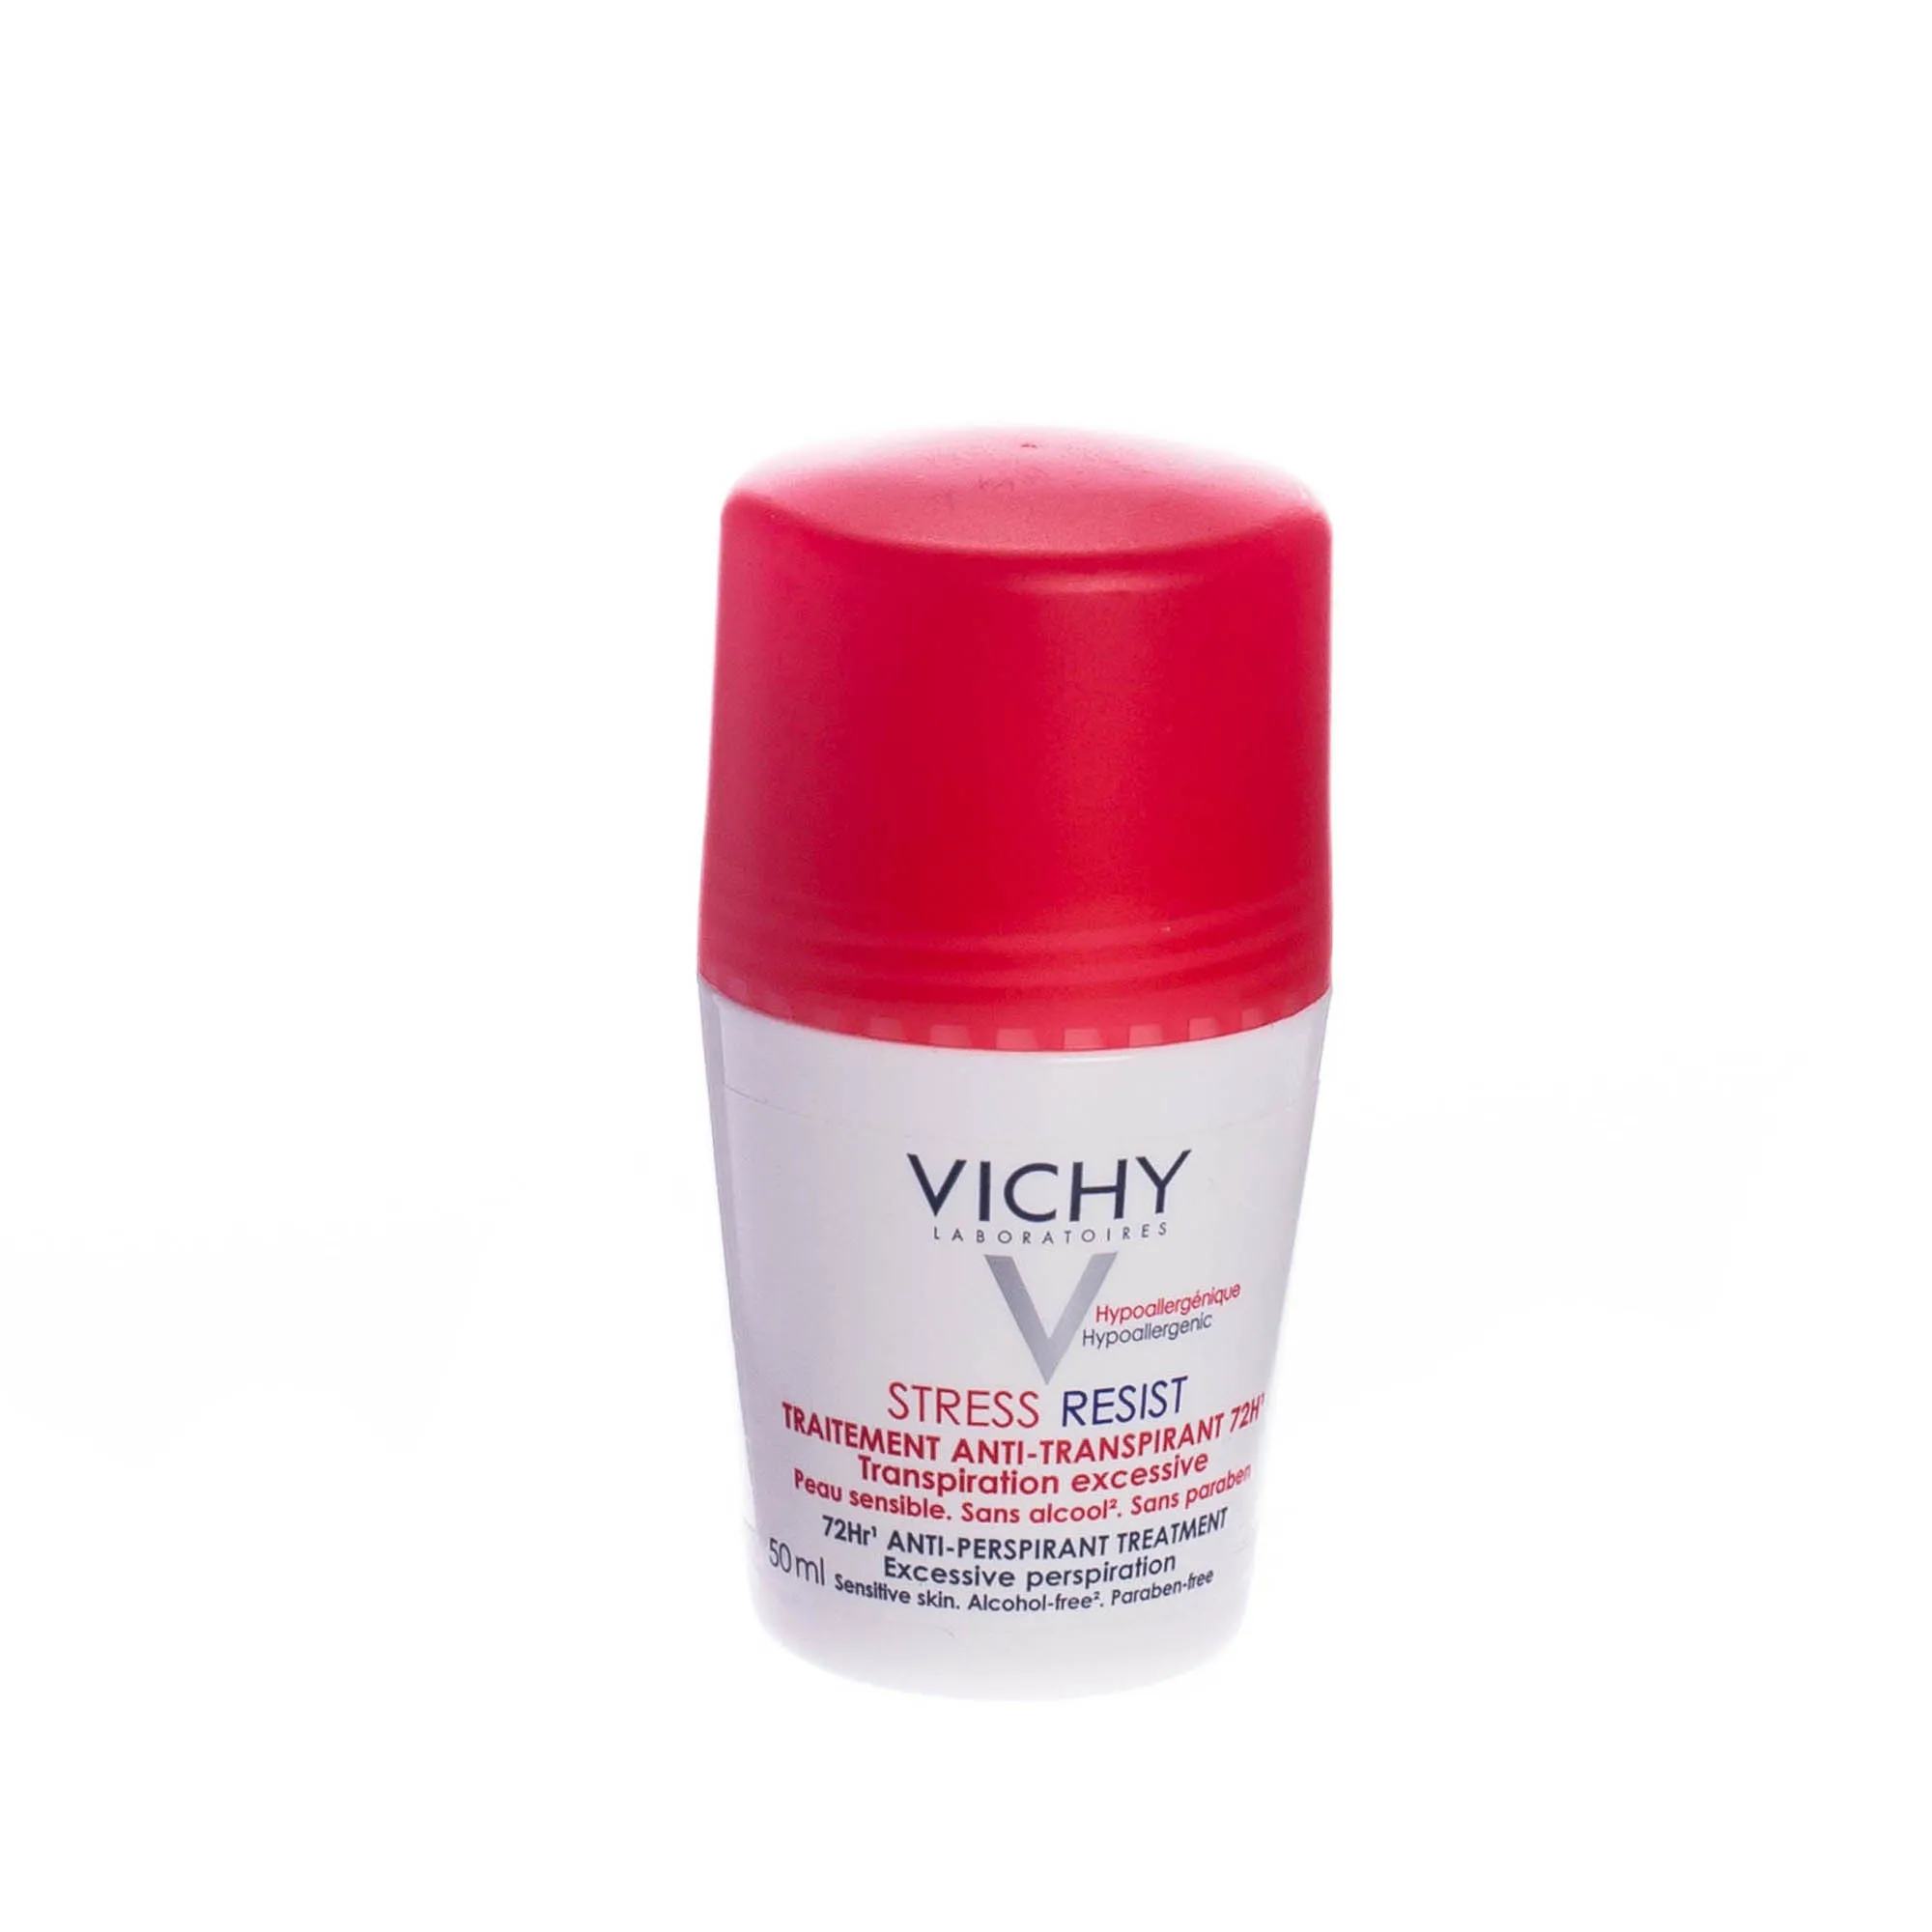 Vichy Stress Resist 72H Traitement Anti-Transpirant, 50 ml